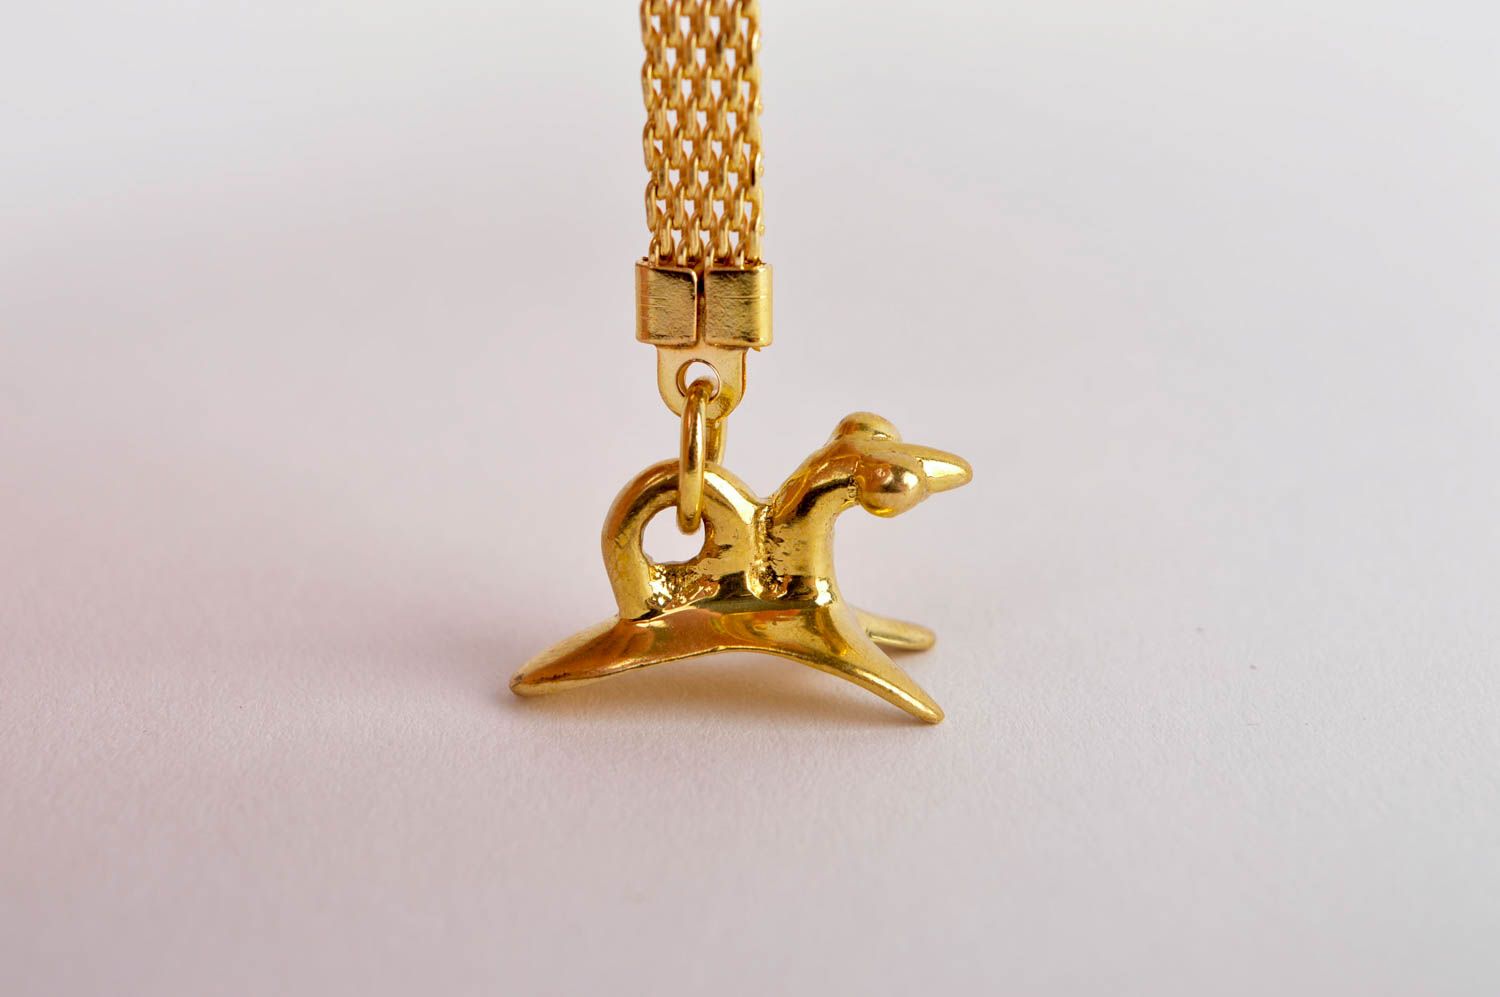 Unusual handmade metal keychain cool keyrings handmade accessories buy a gift photo 3